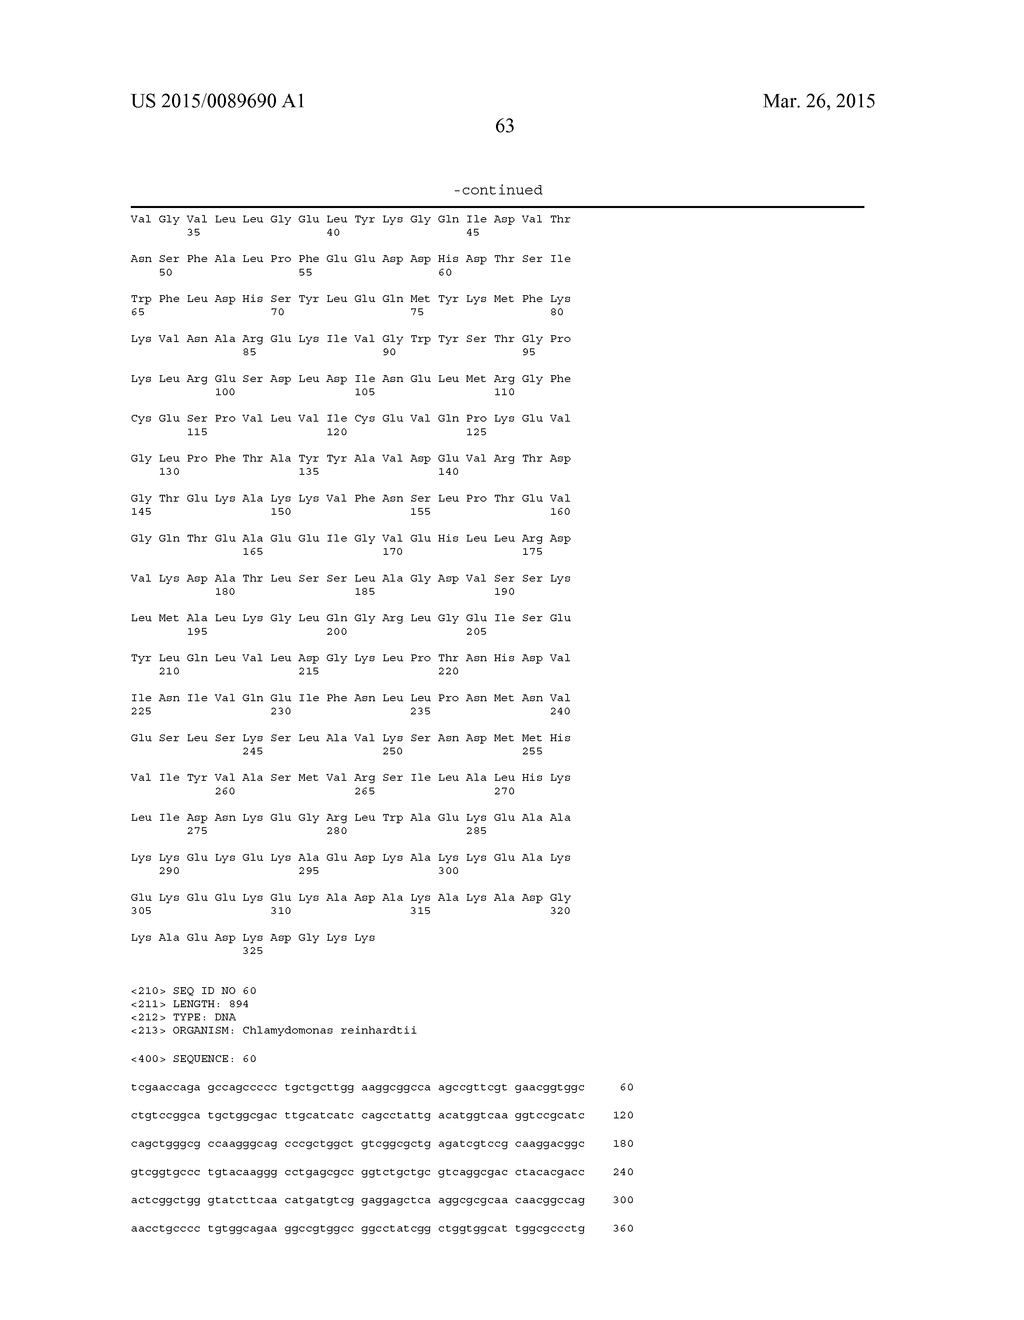 SODIUM HYPOCHLORITE RESISTANT GENES - diagram, schematic, and image 109